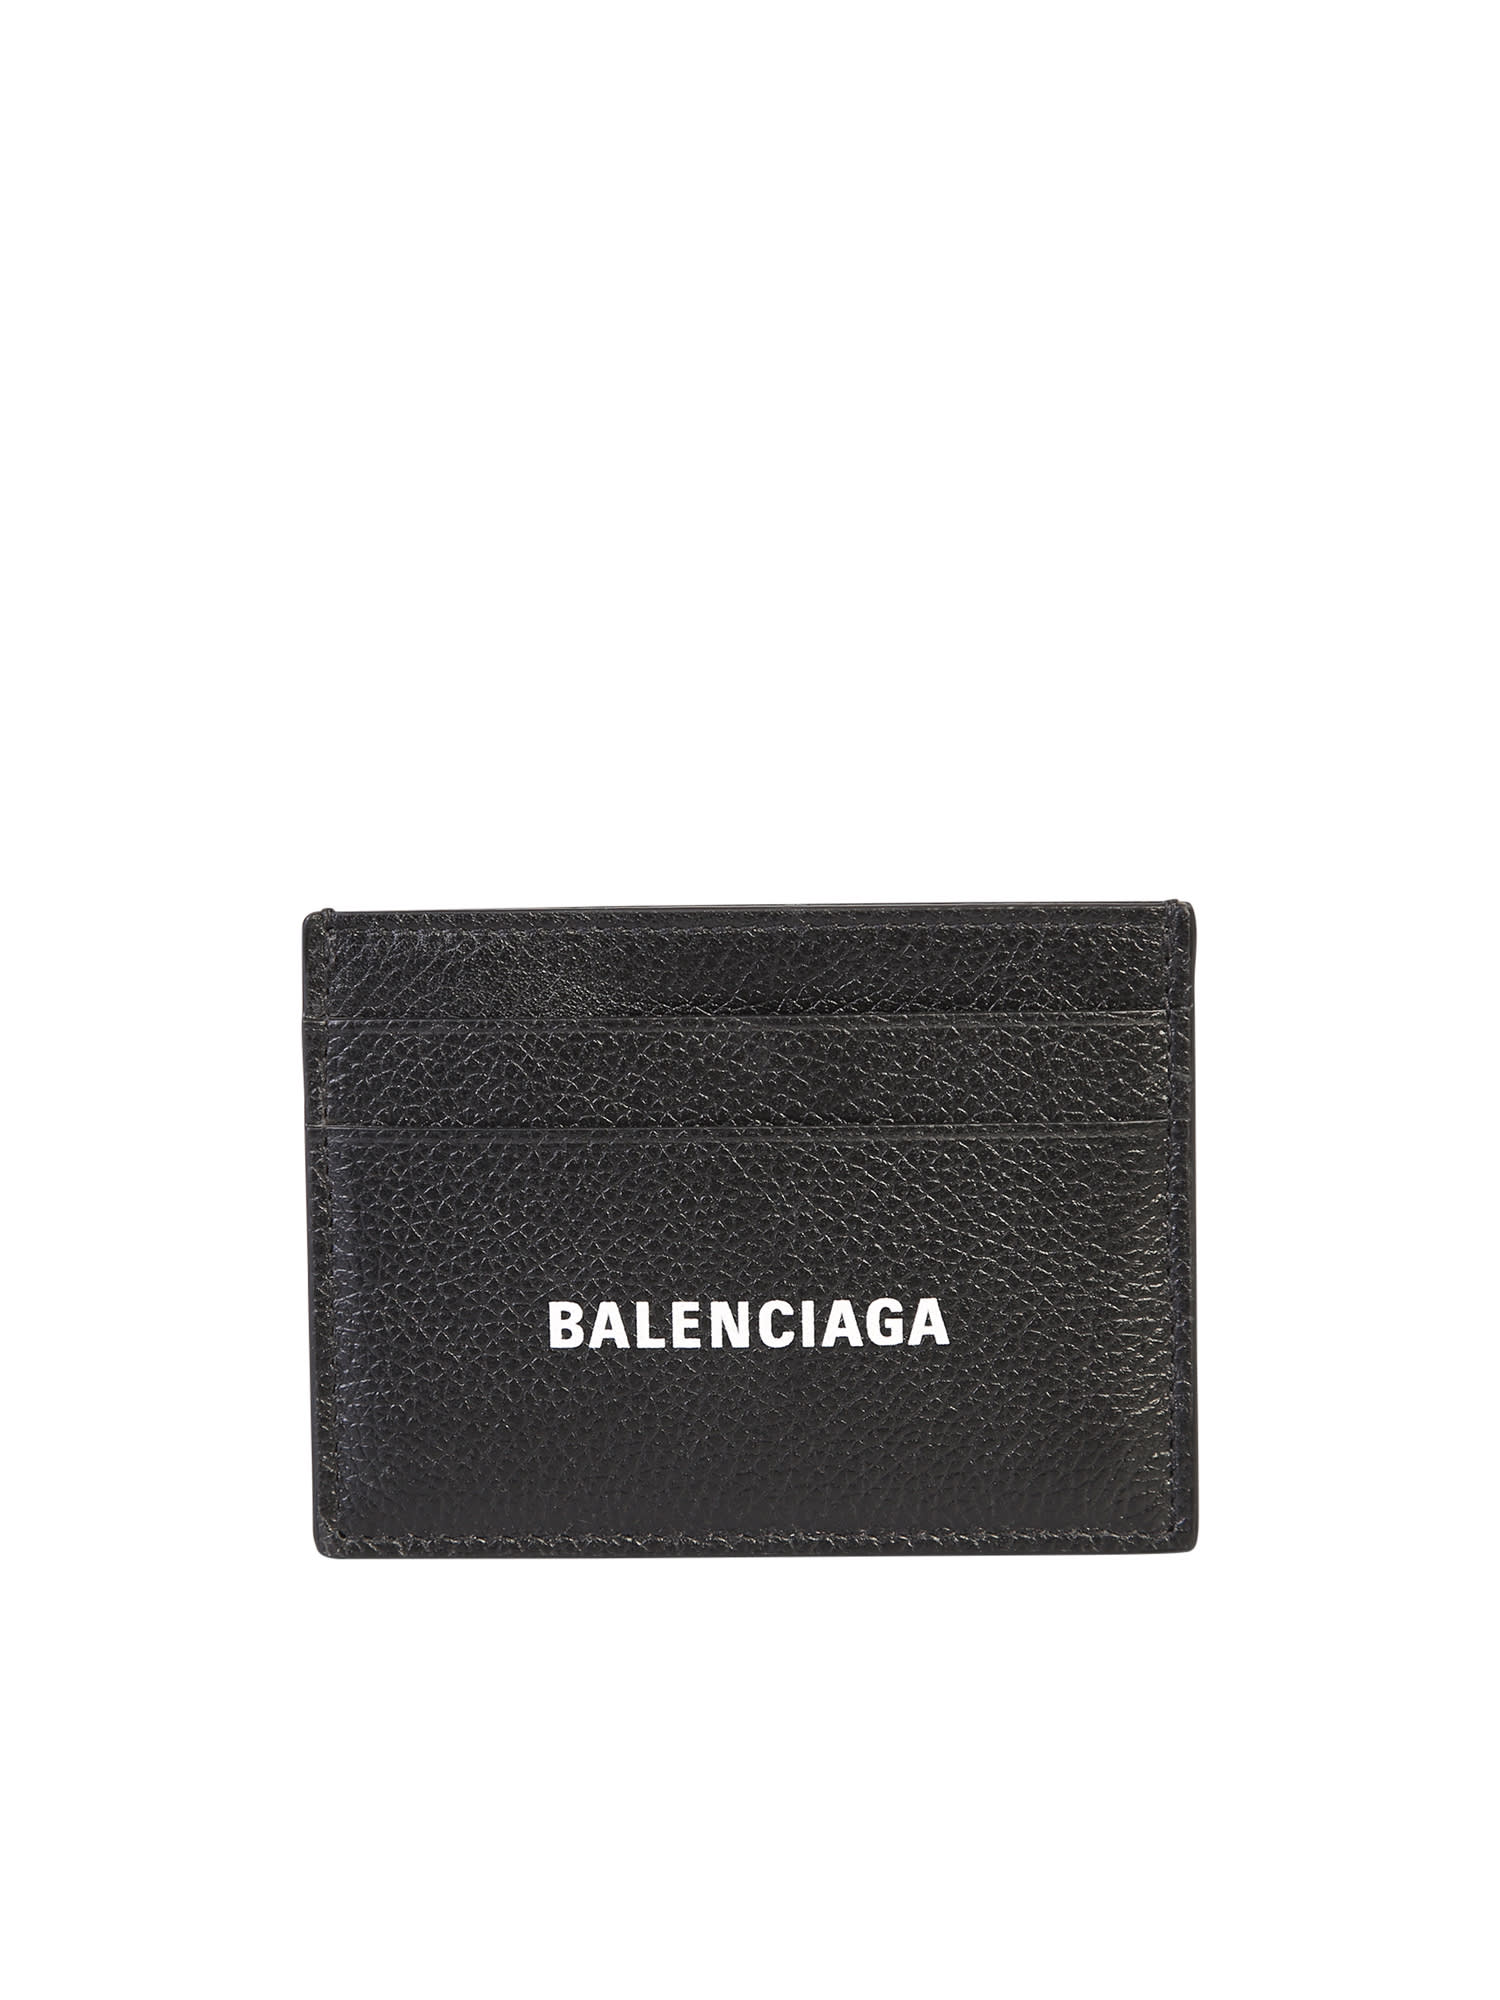 Balenciaga Black Leather Cardholder